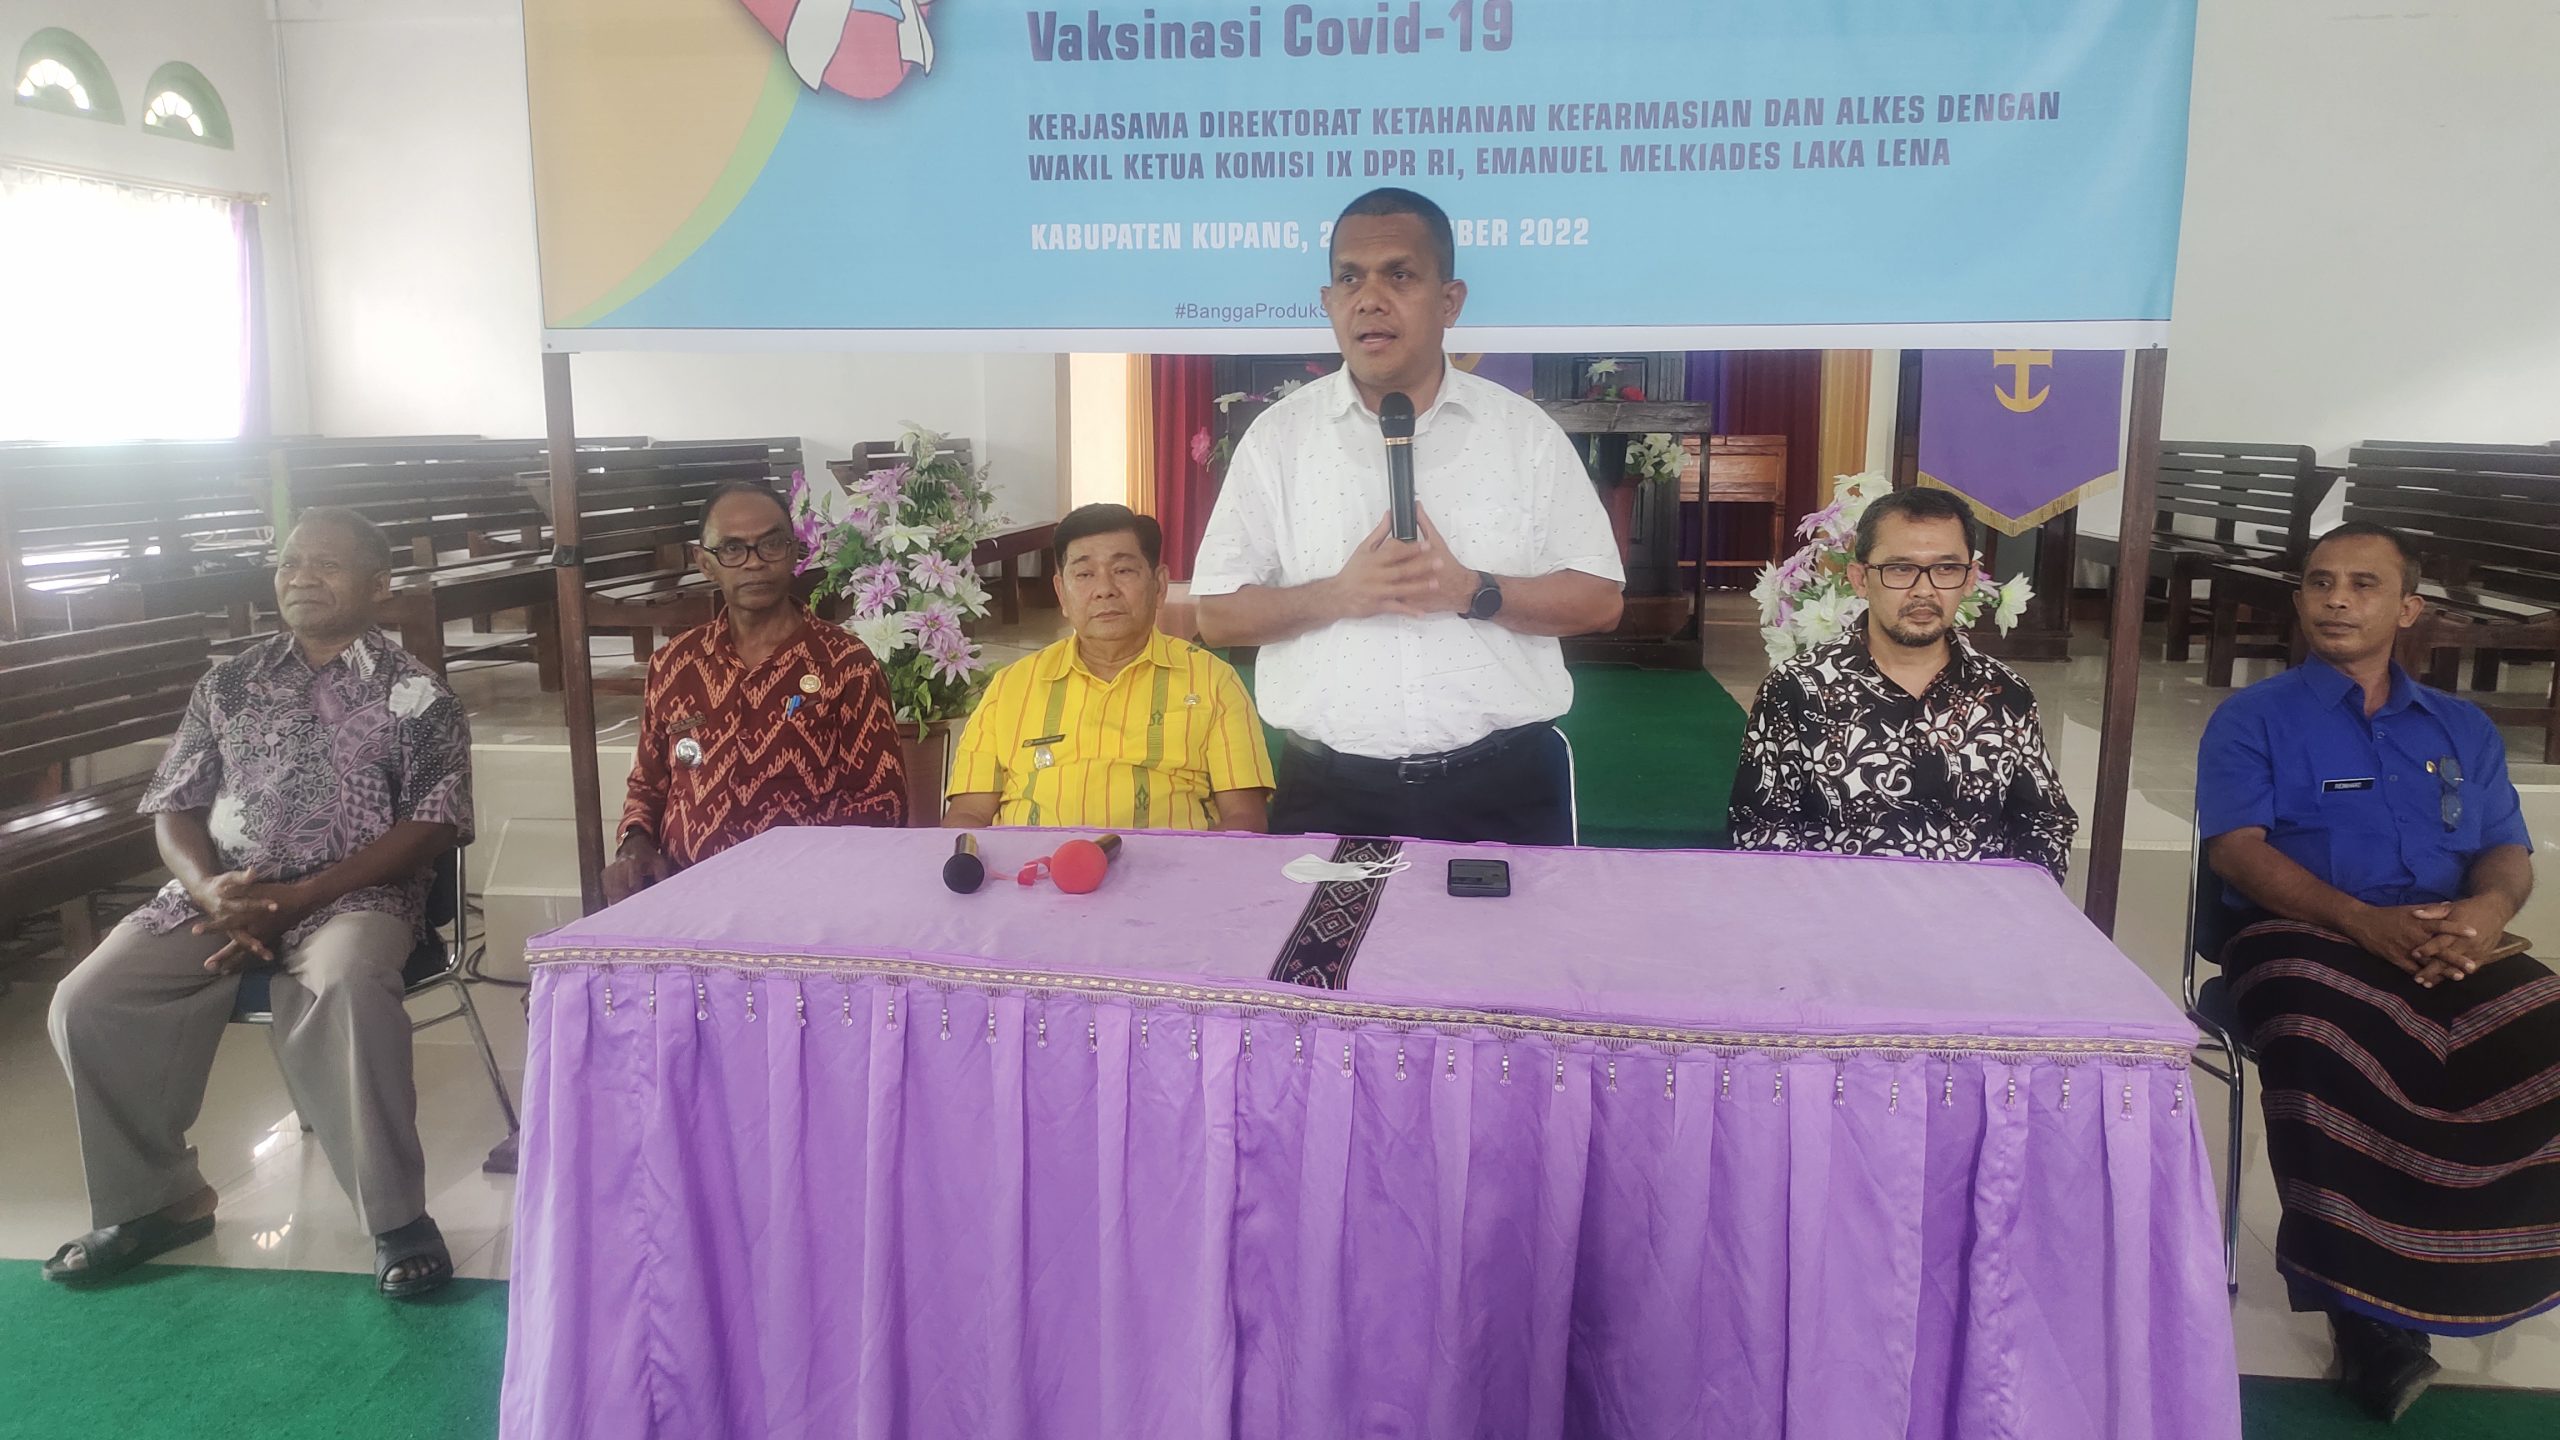 Foto. Wakil Ketua Komisi IX DPR RI Emanuel Melkiades Laka Lena, mengaku prihatin dengan kondisi RSUD Naibonat  Kabupaten Kupang -NTT yang menurutnya perlu perhatian serius.